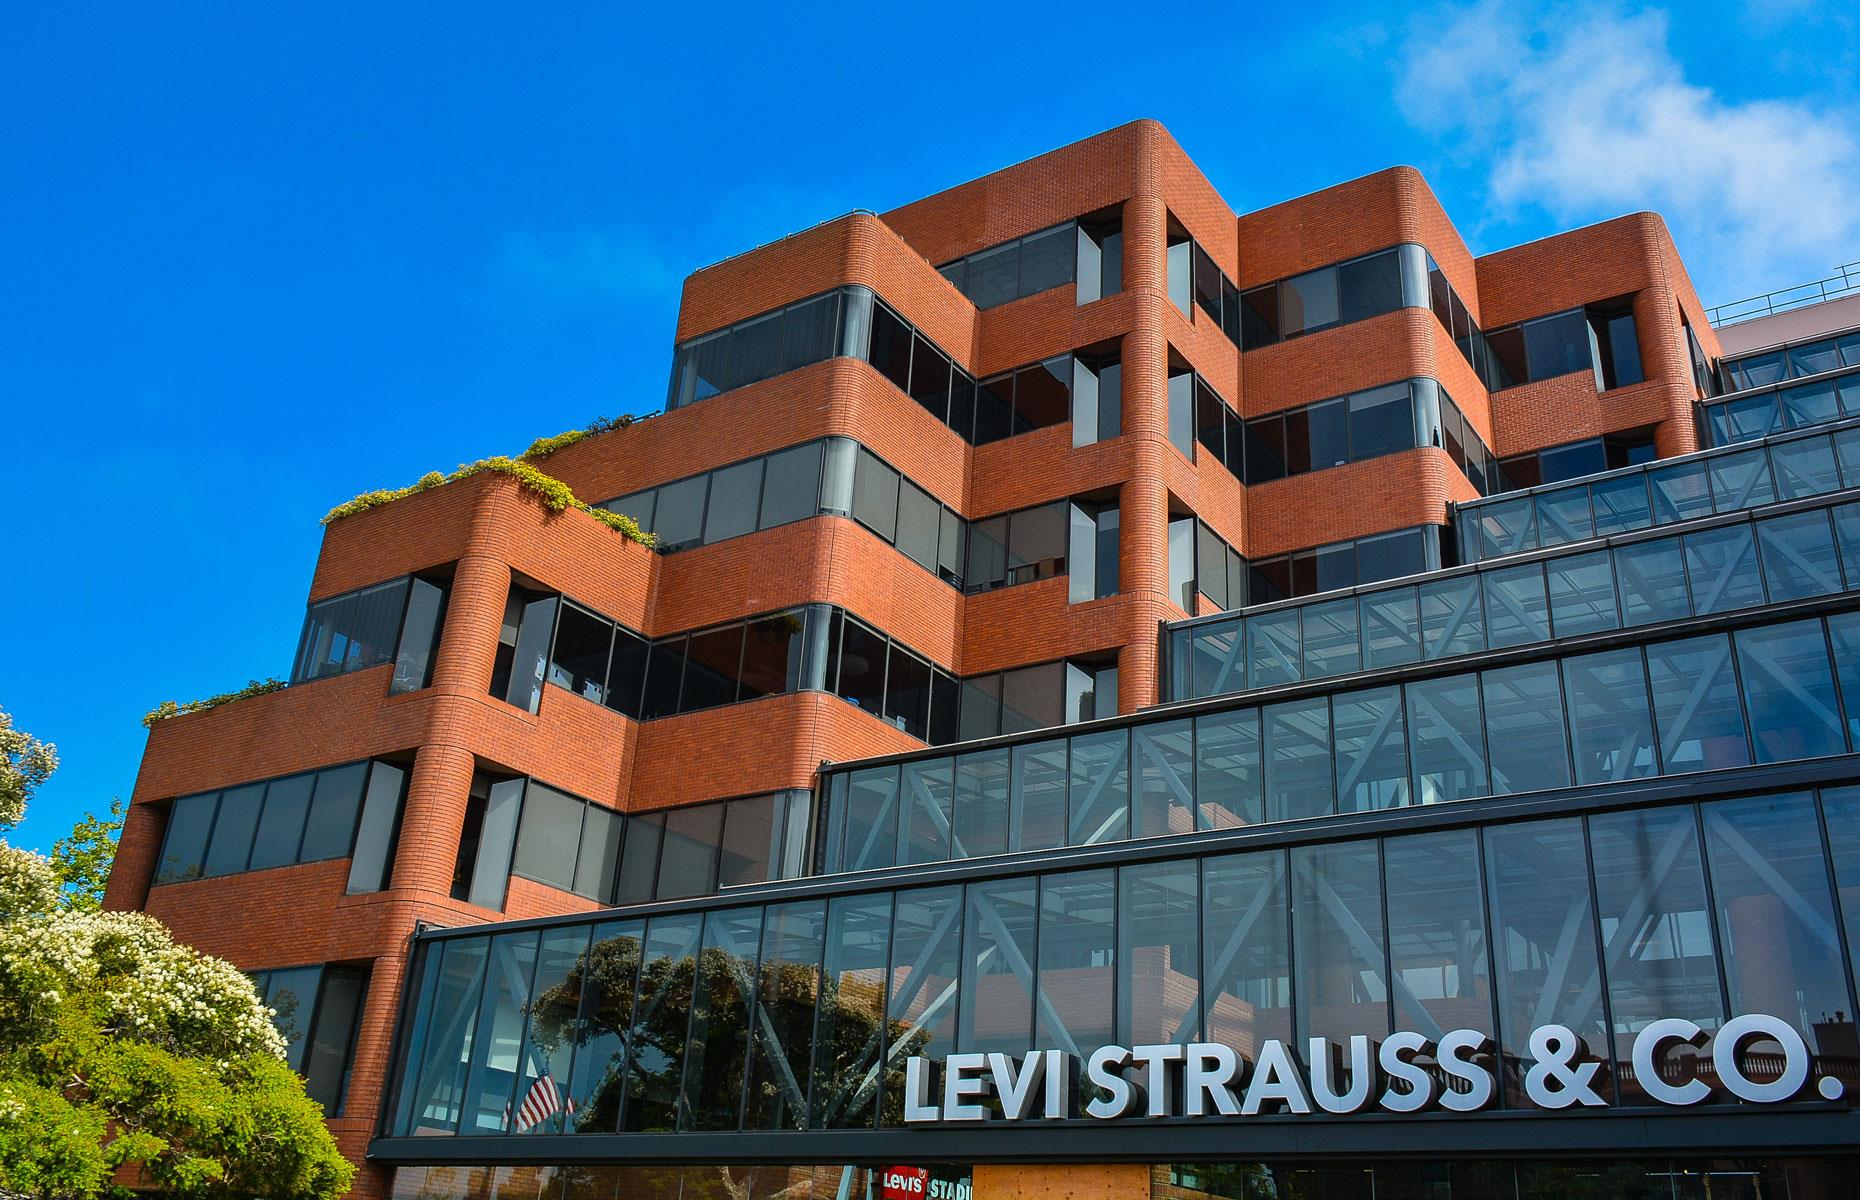 14. Levi Strauss & Co